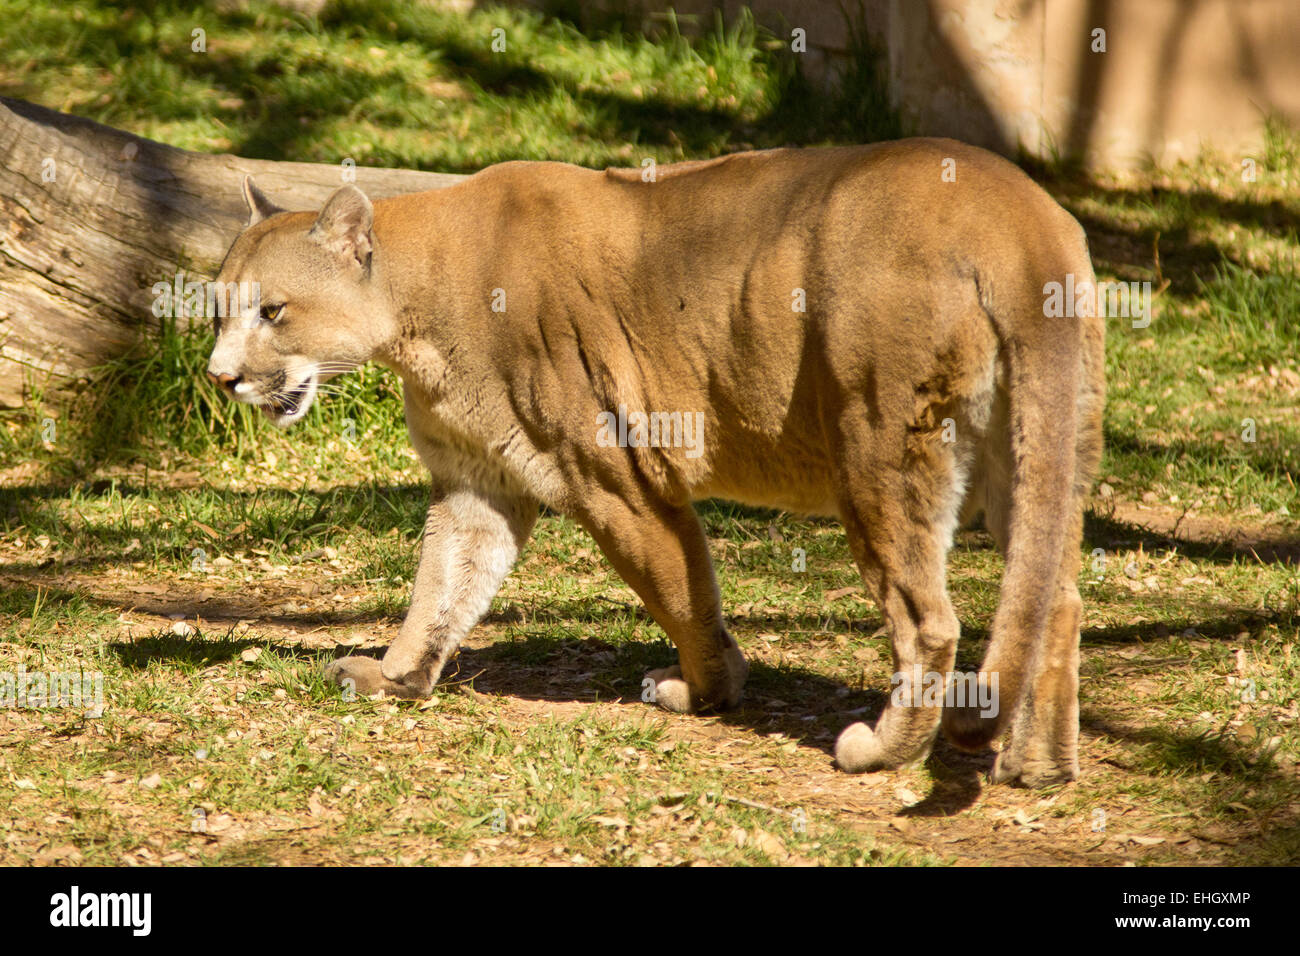 Puma, Cougar or Mountain Lion Stock Photo